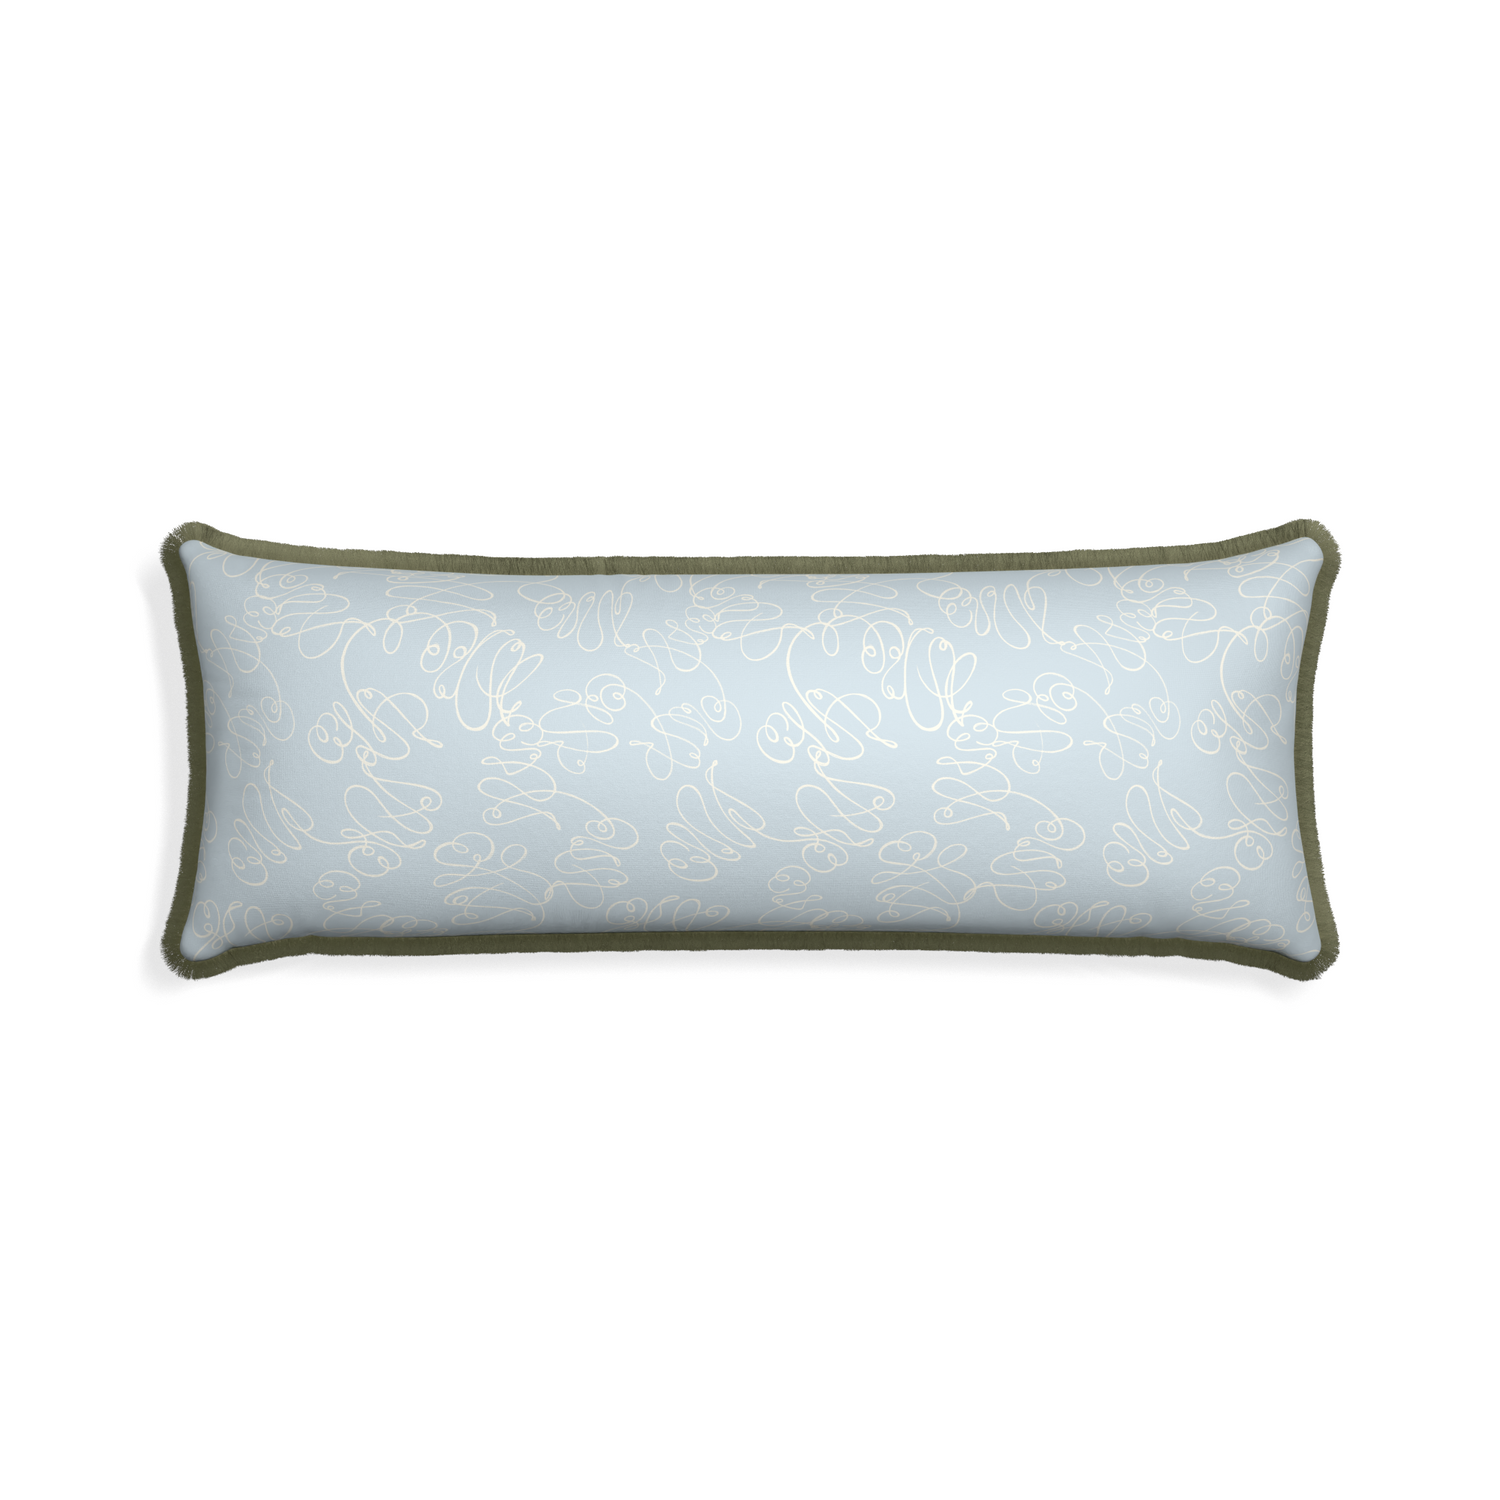 Xl-lumbar mirabella custom pillow with sage fringe on white background